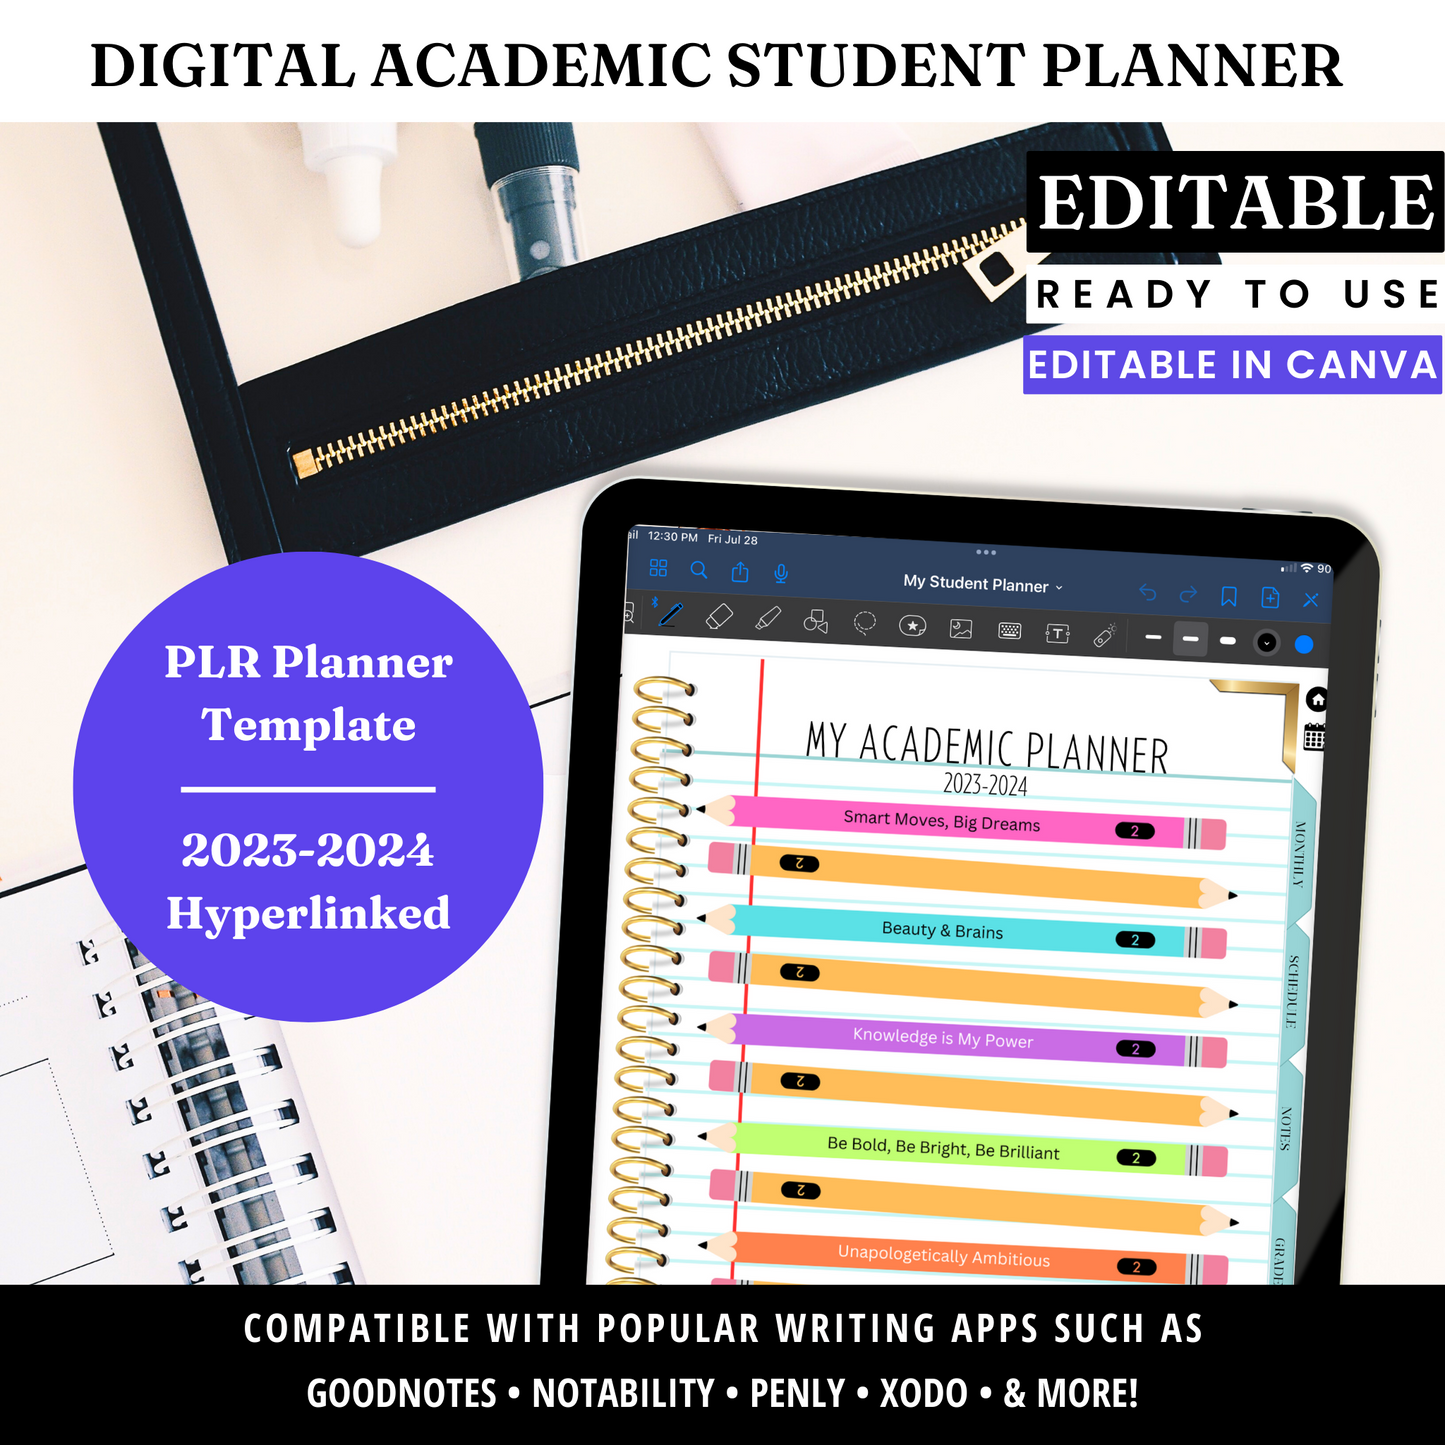 Digital Academic Student Planner Template - PLR